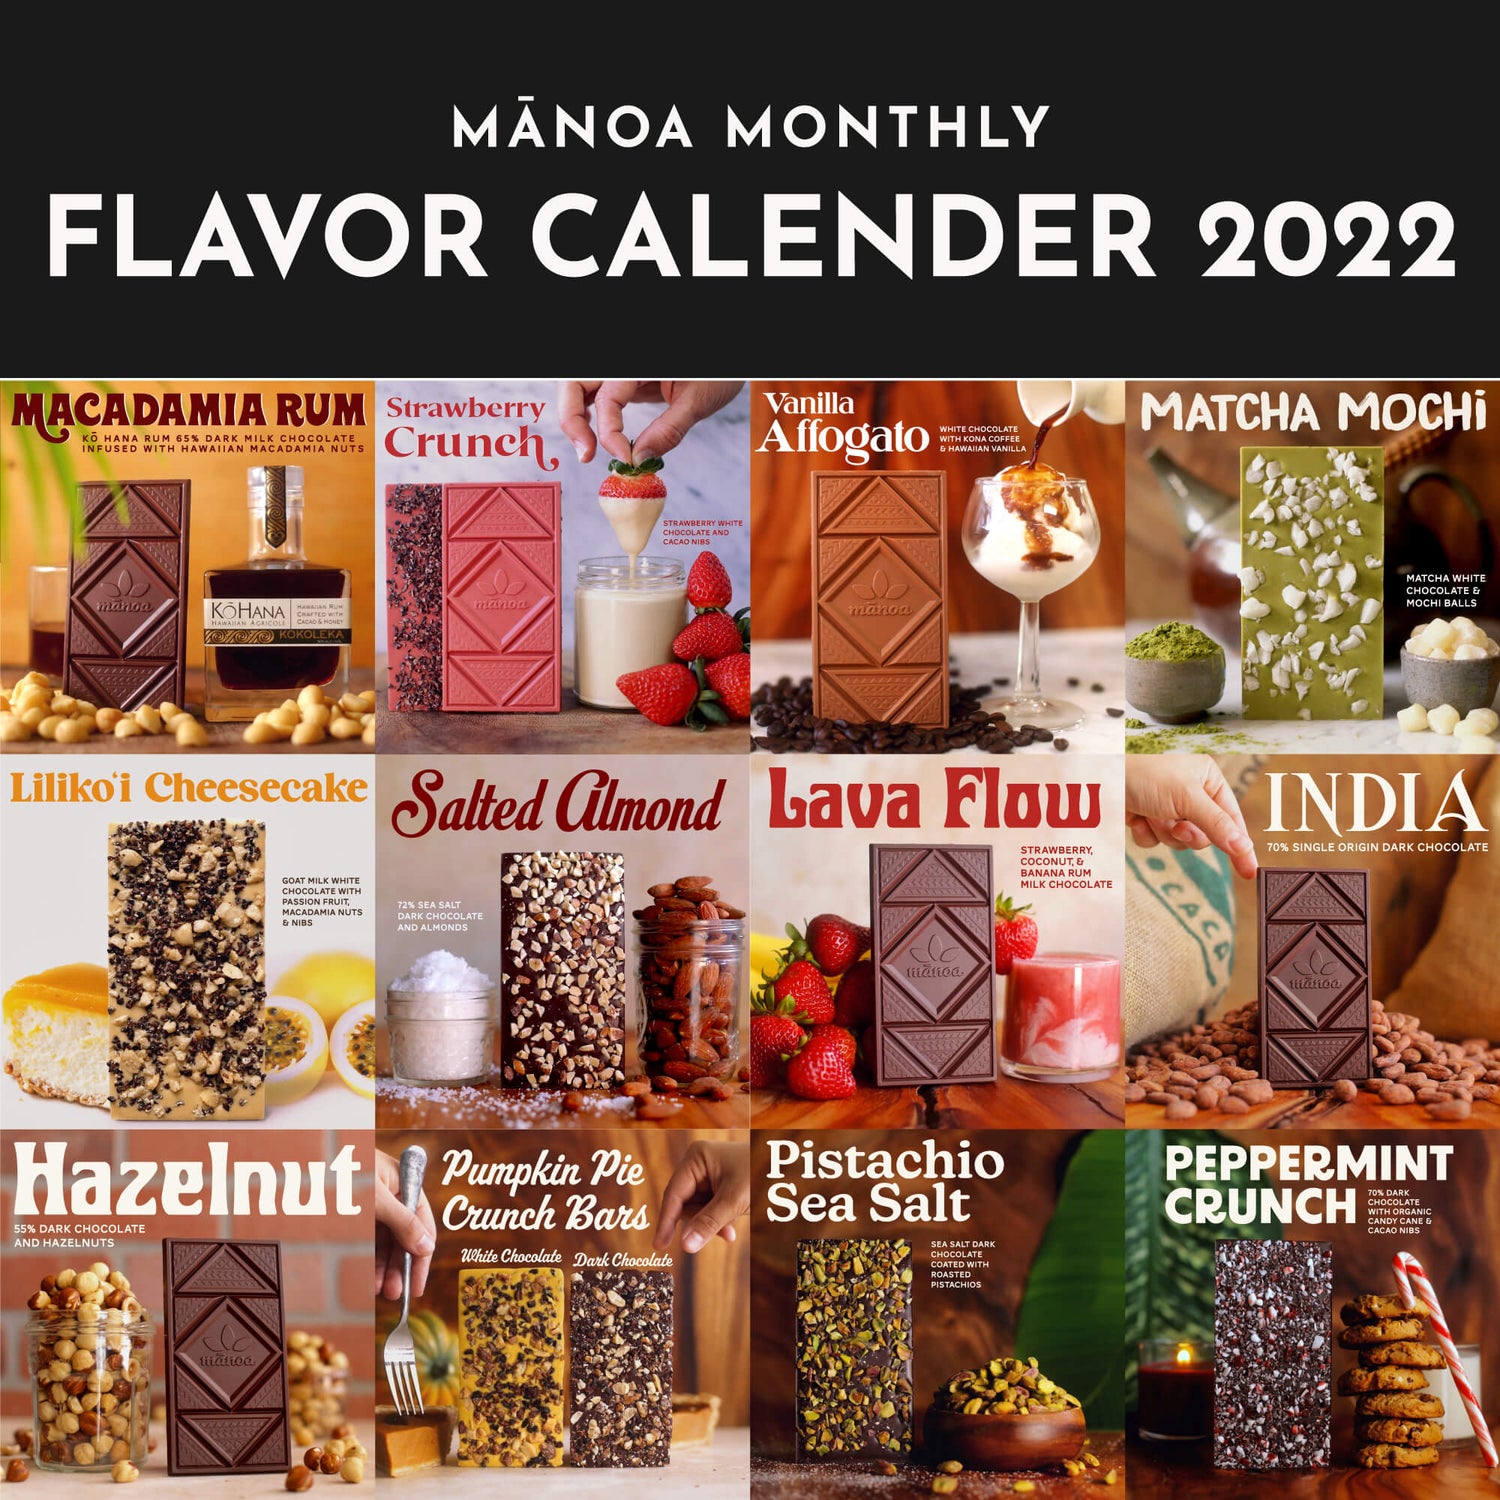 Image of past Manoa Monthly flavors, like Strawberry Crunch, Matcha Mochi, and Vanilla Affogato